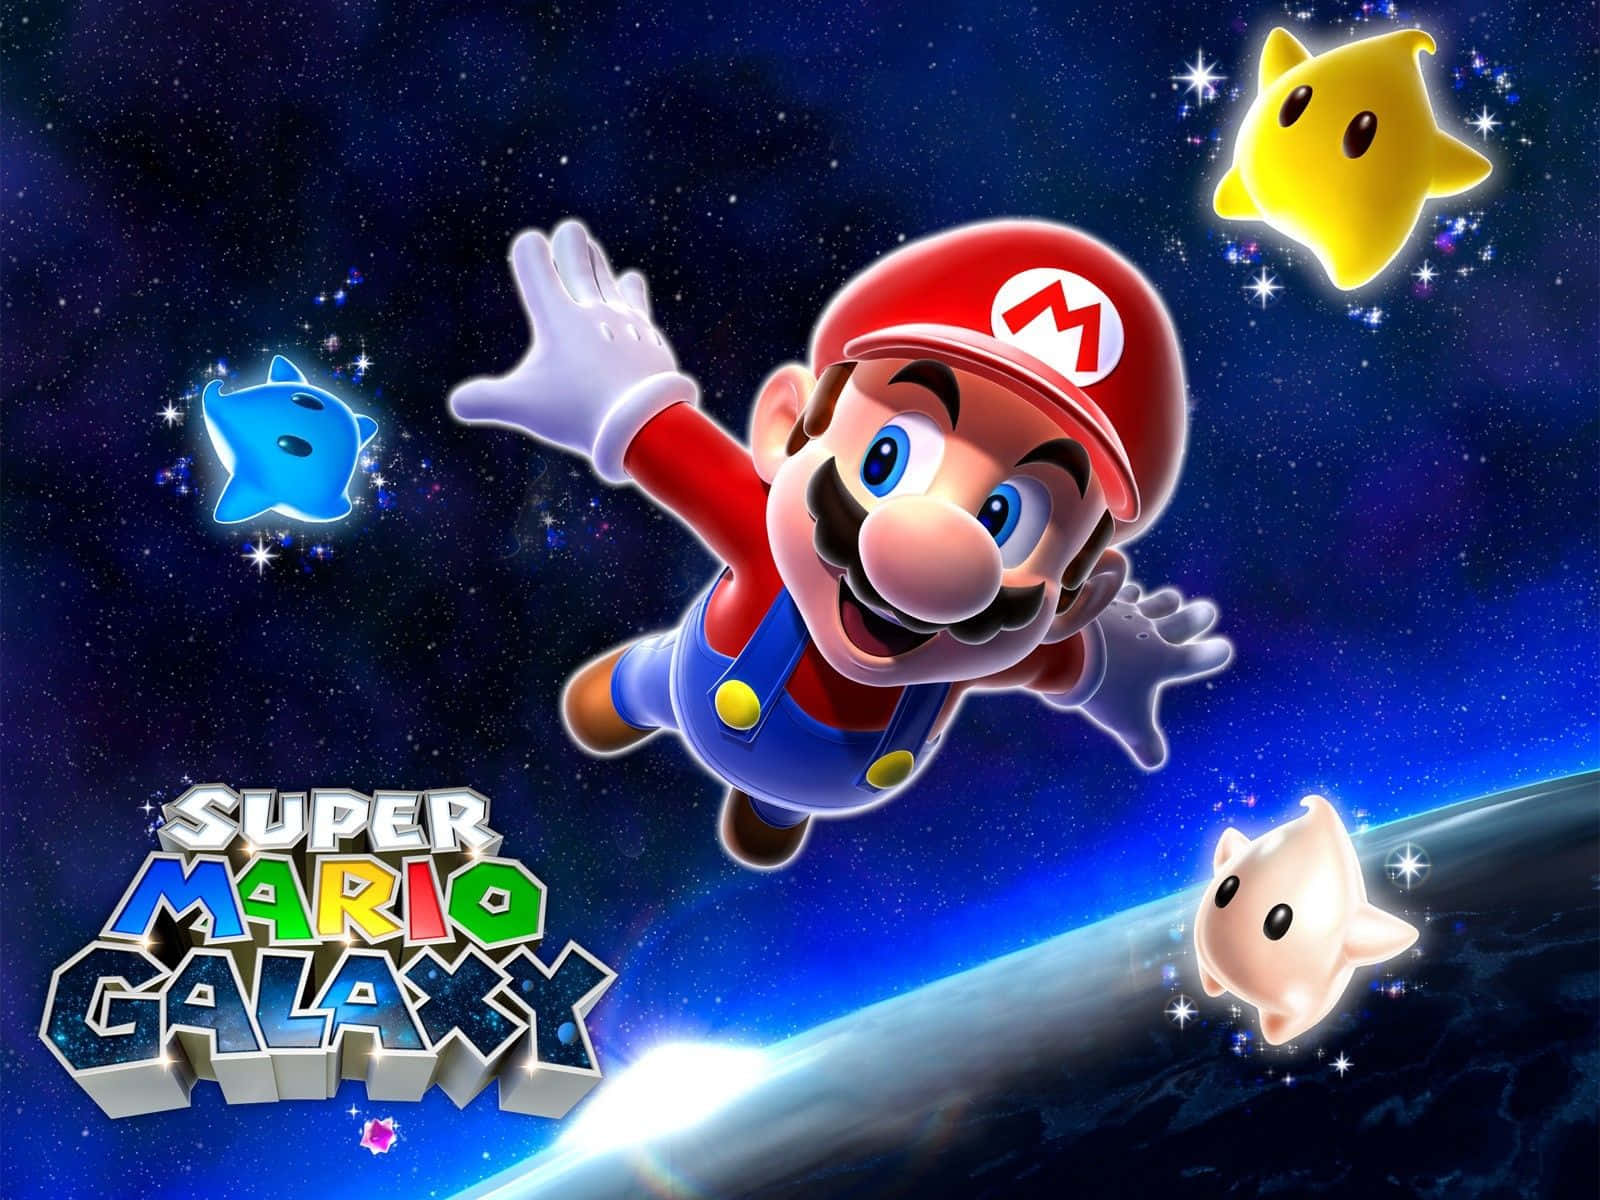 Super Mario Galaxy 2 - Mario soaring through the universe Wallpaper